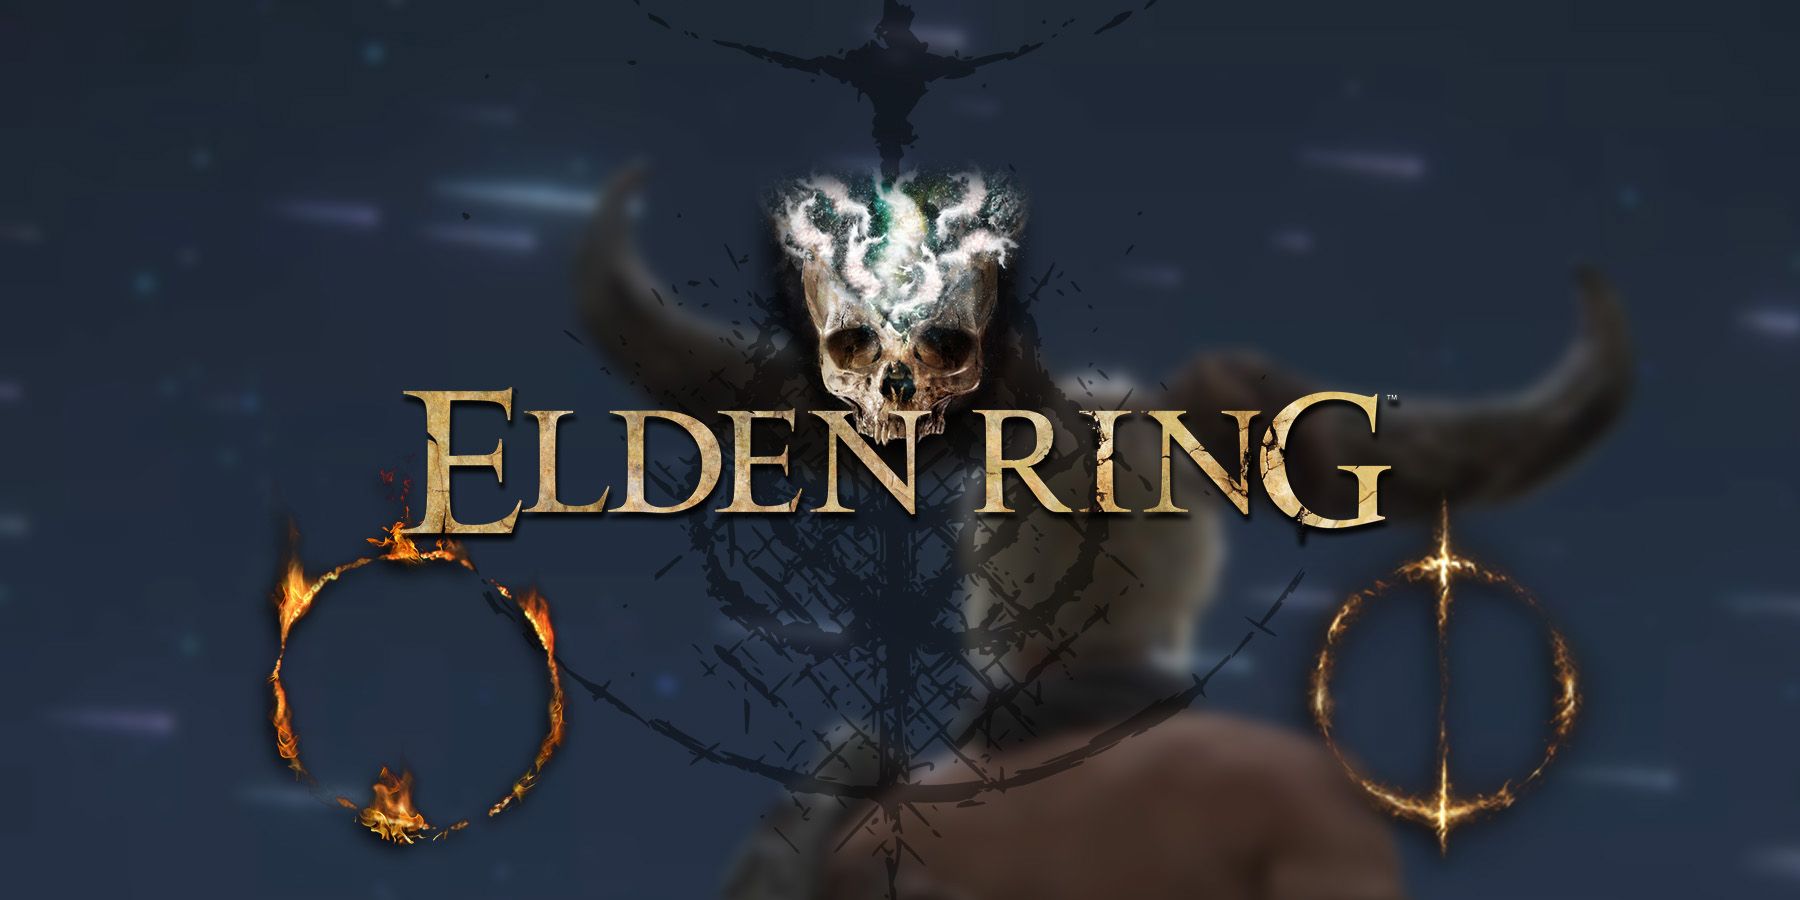 Radagon from elden ring versus vendrick from dark souls 2